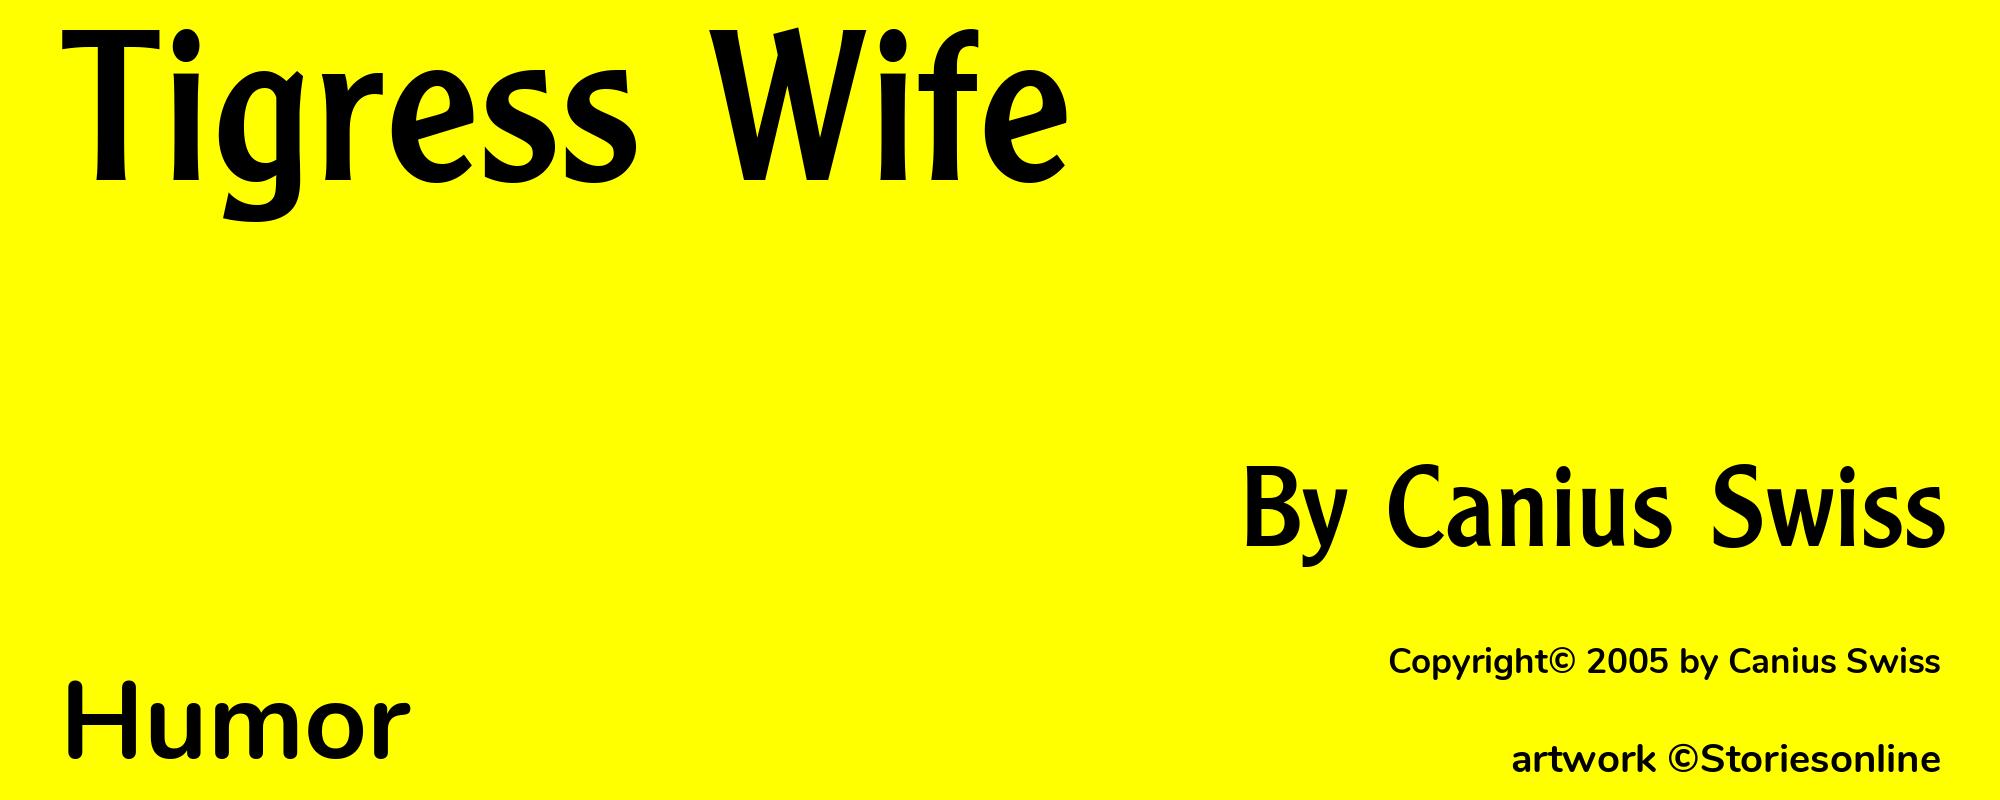 Tigress Wife - Cover